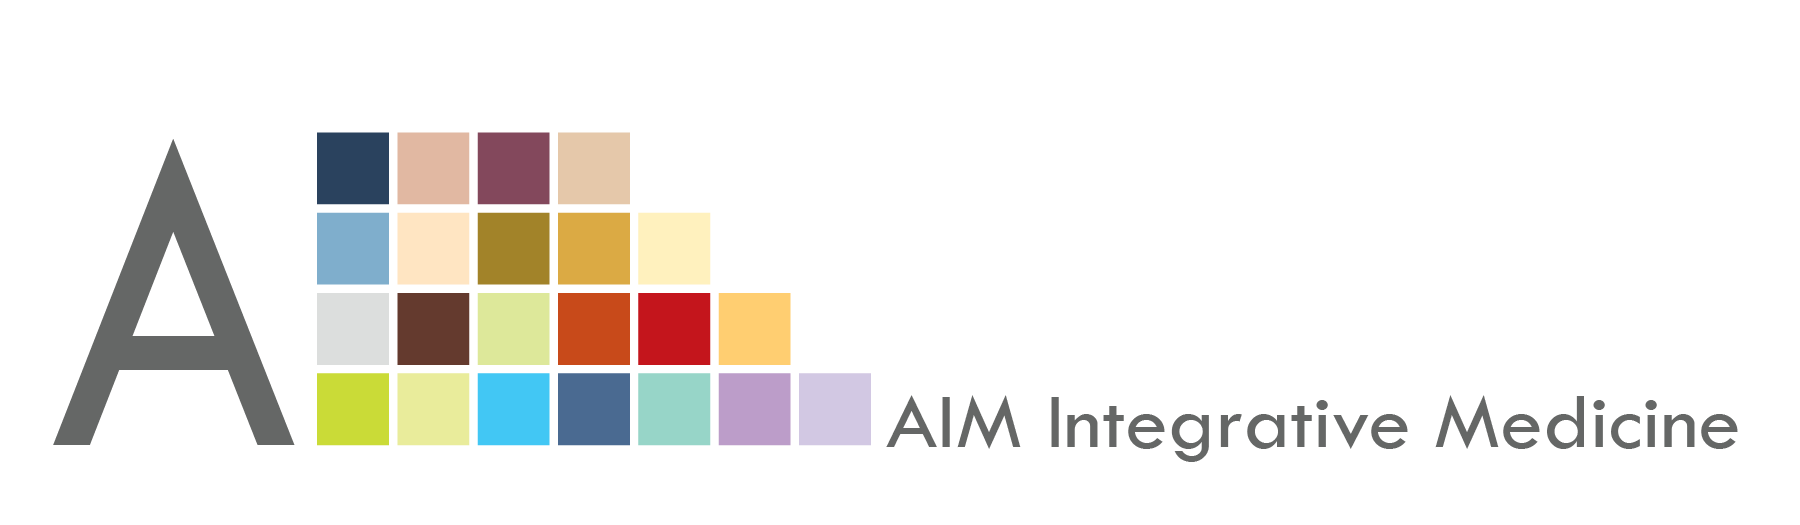 AIM Integrative Medicine